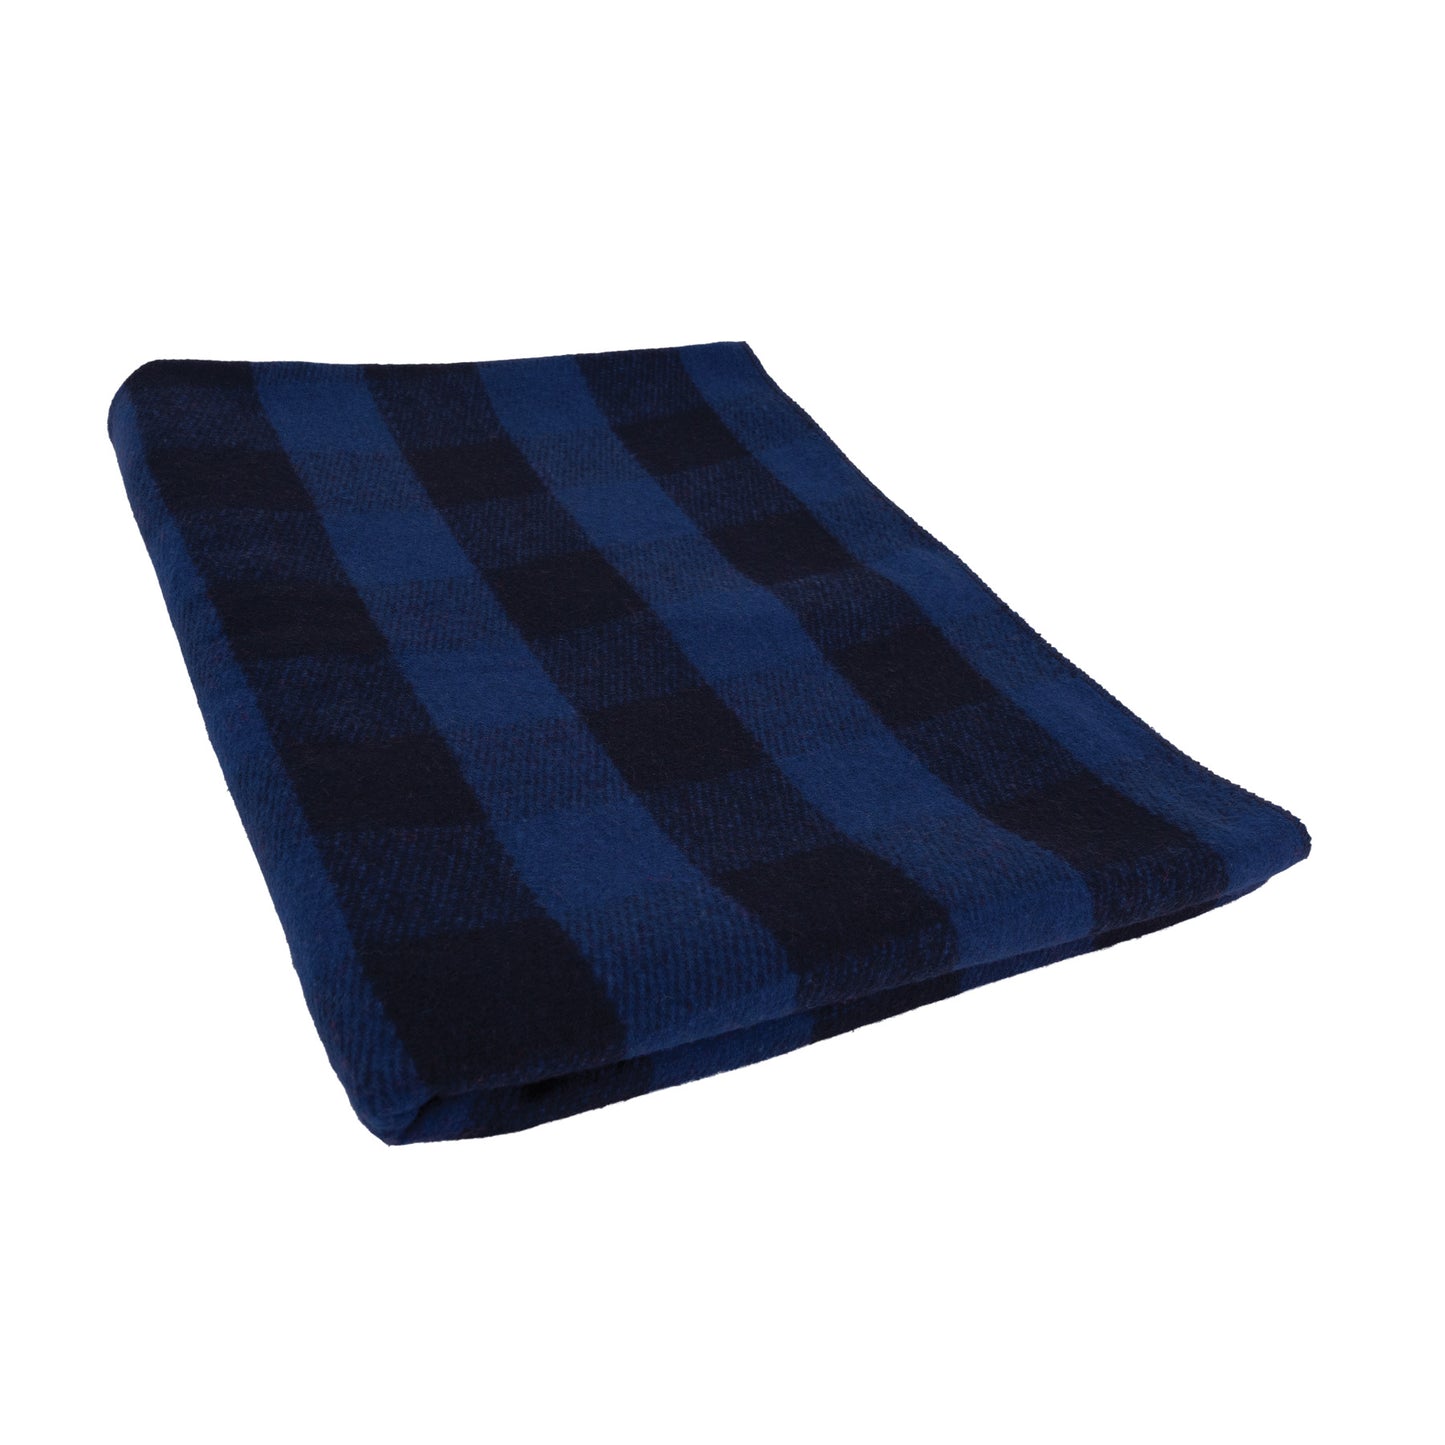 Plaid Wool Blanket 62"x 80"